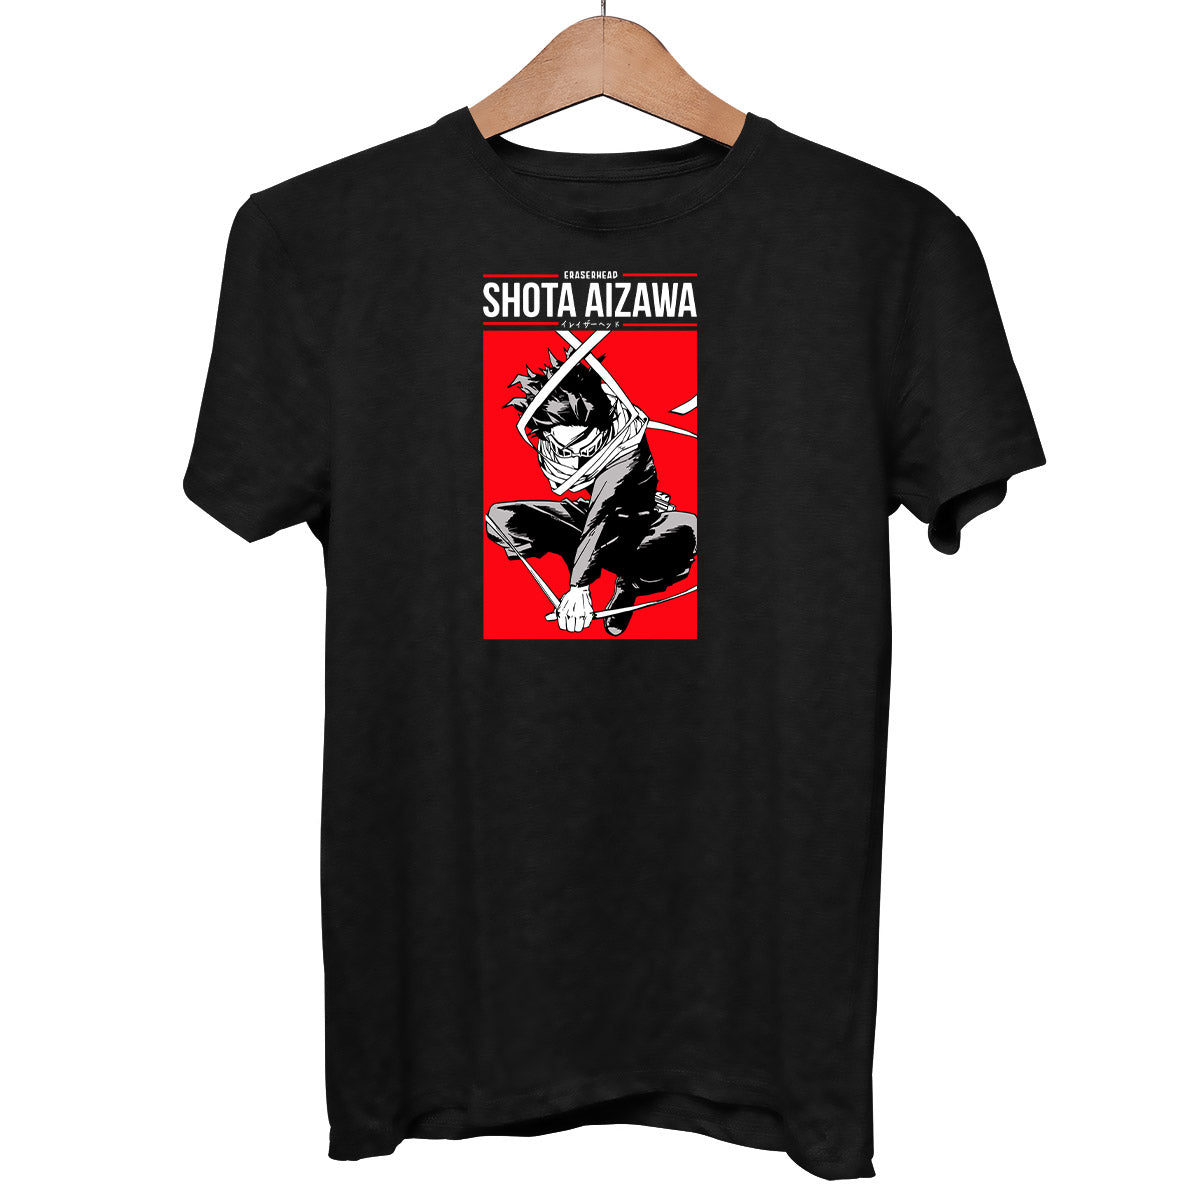 Eraserhead Shota Aizawa My Hero Academia Anime Adult Unisex Black T-shirt